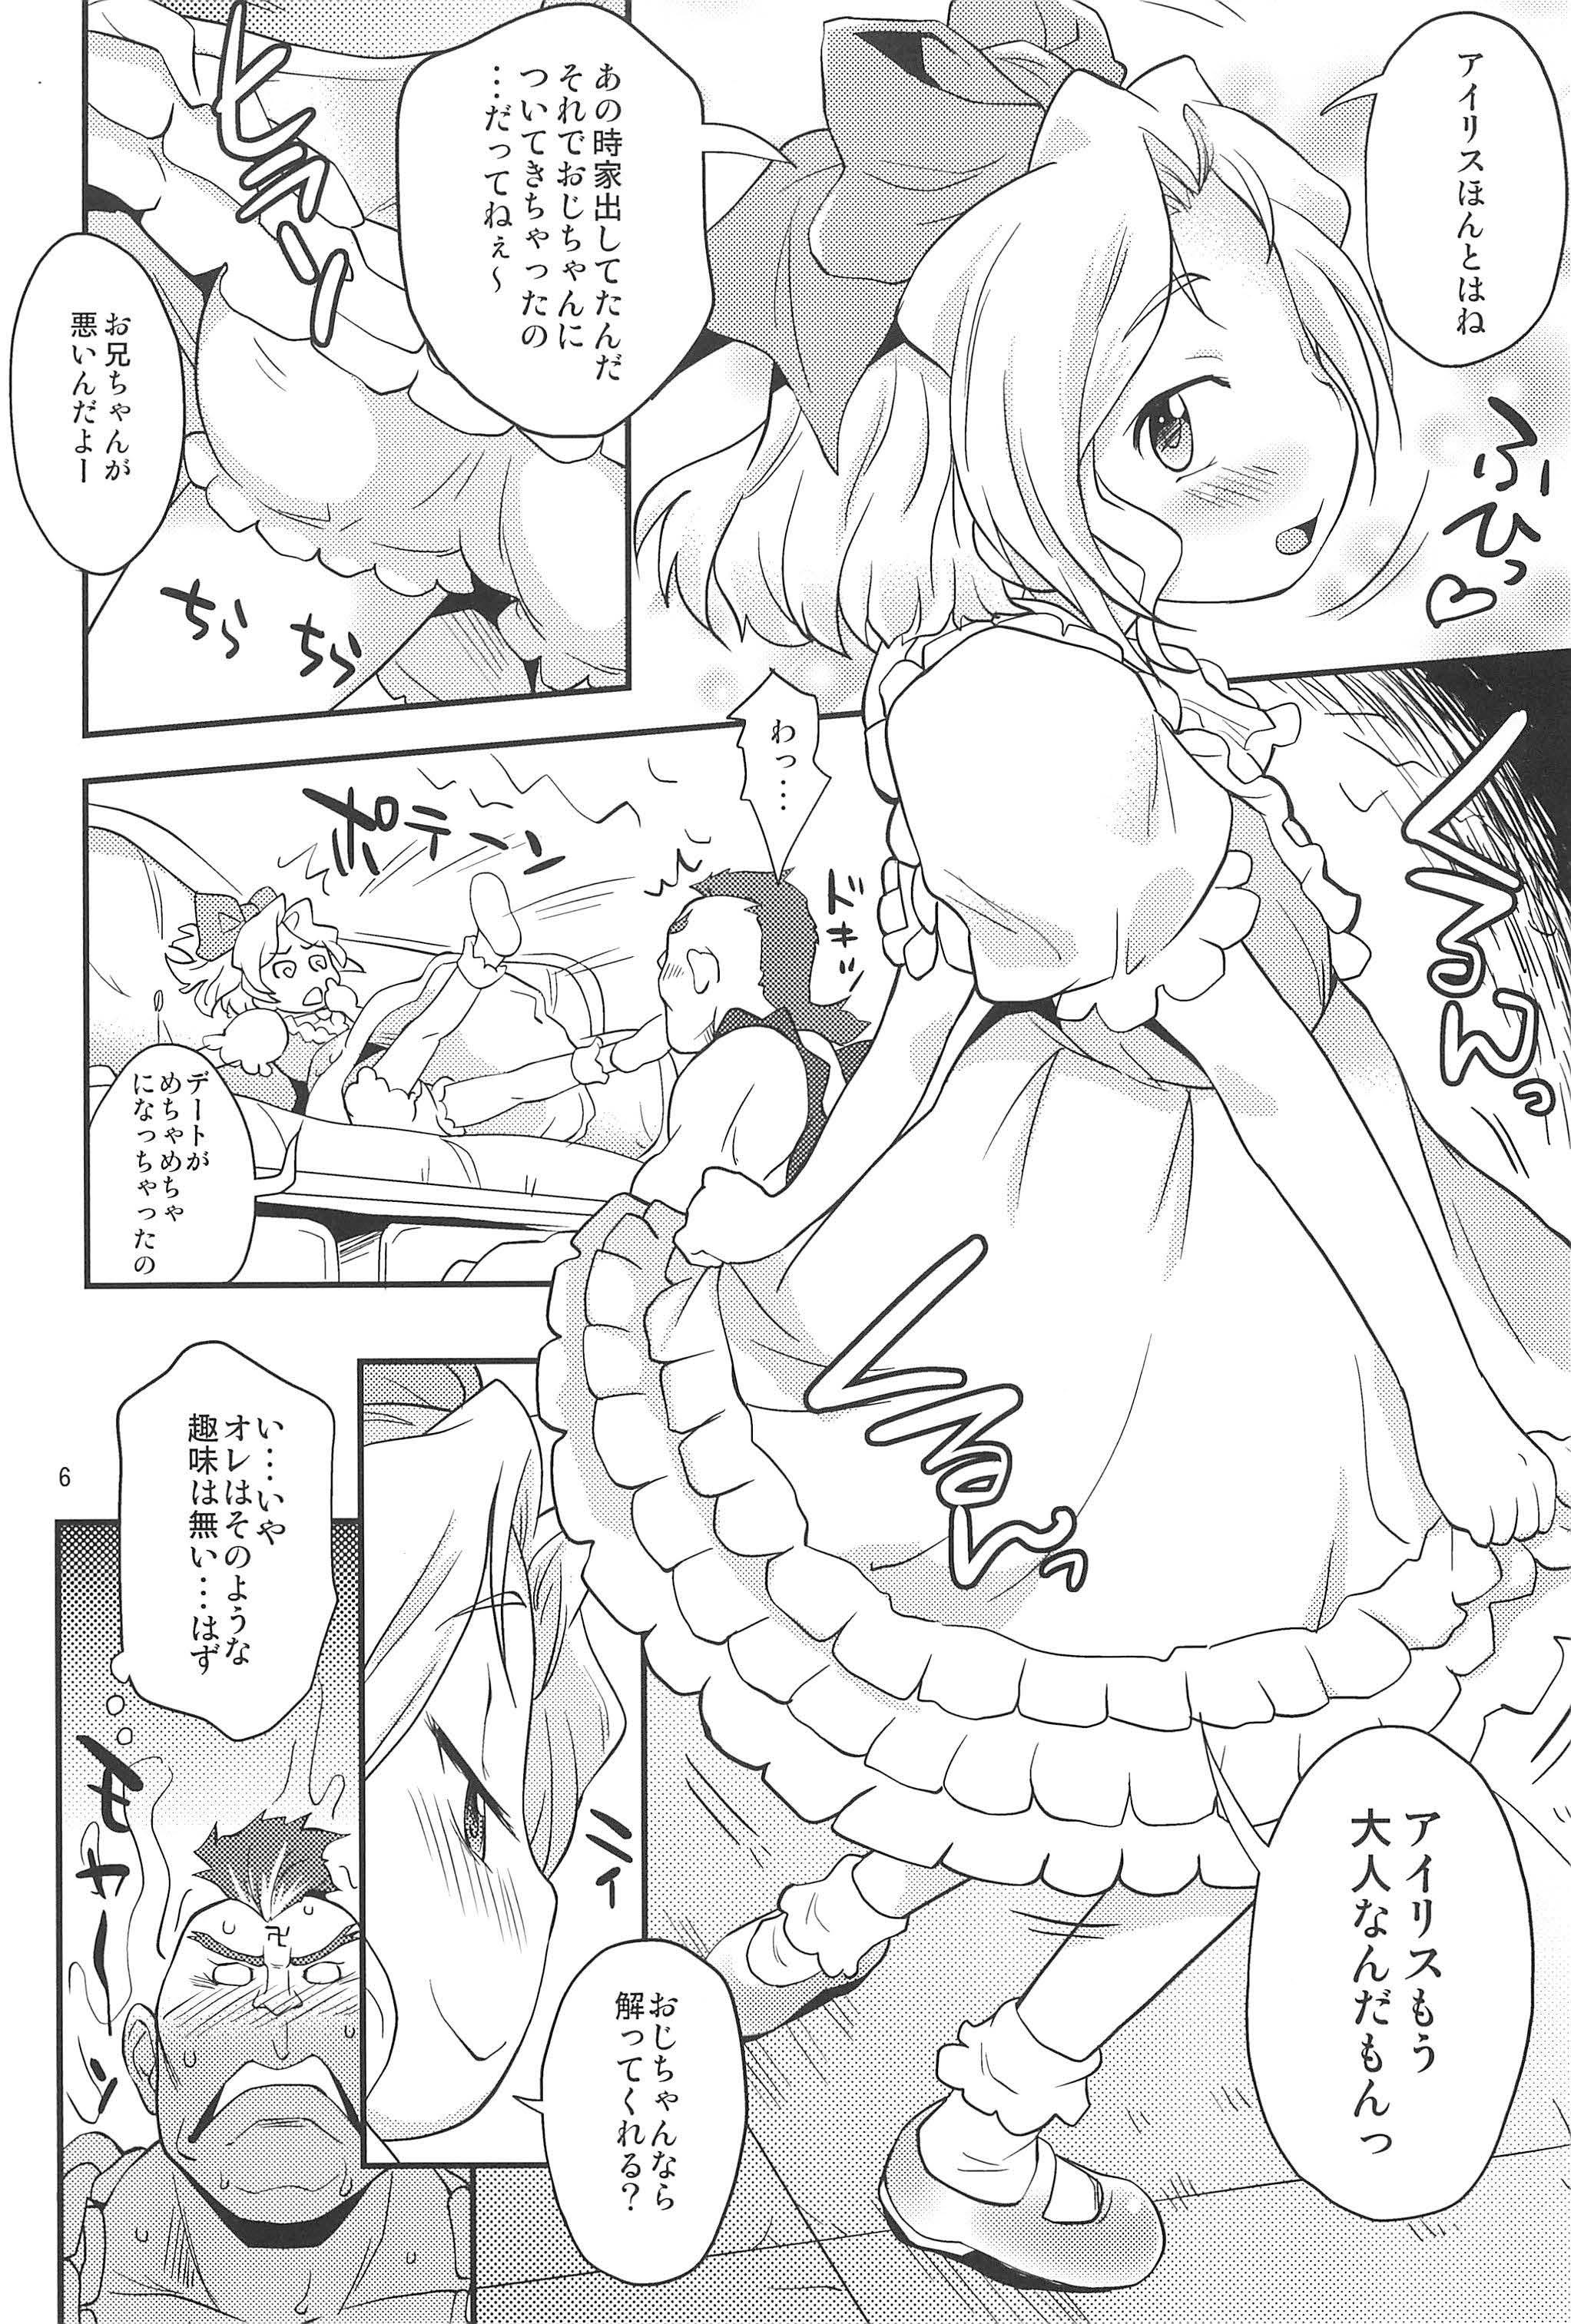 Internal Teikoku Candy - Sakura taisen Foreplay - Page 6